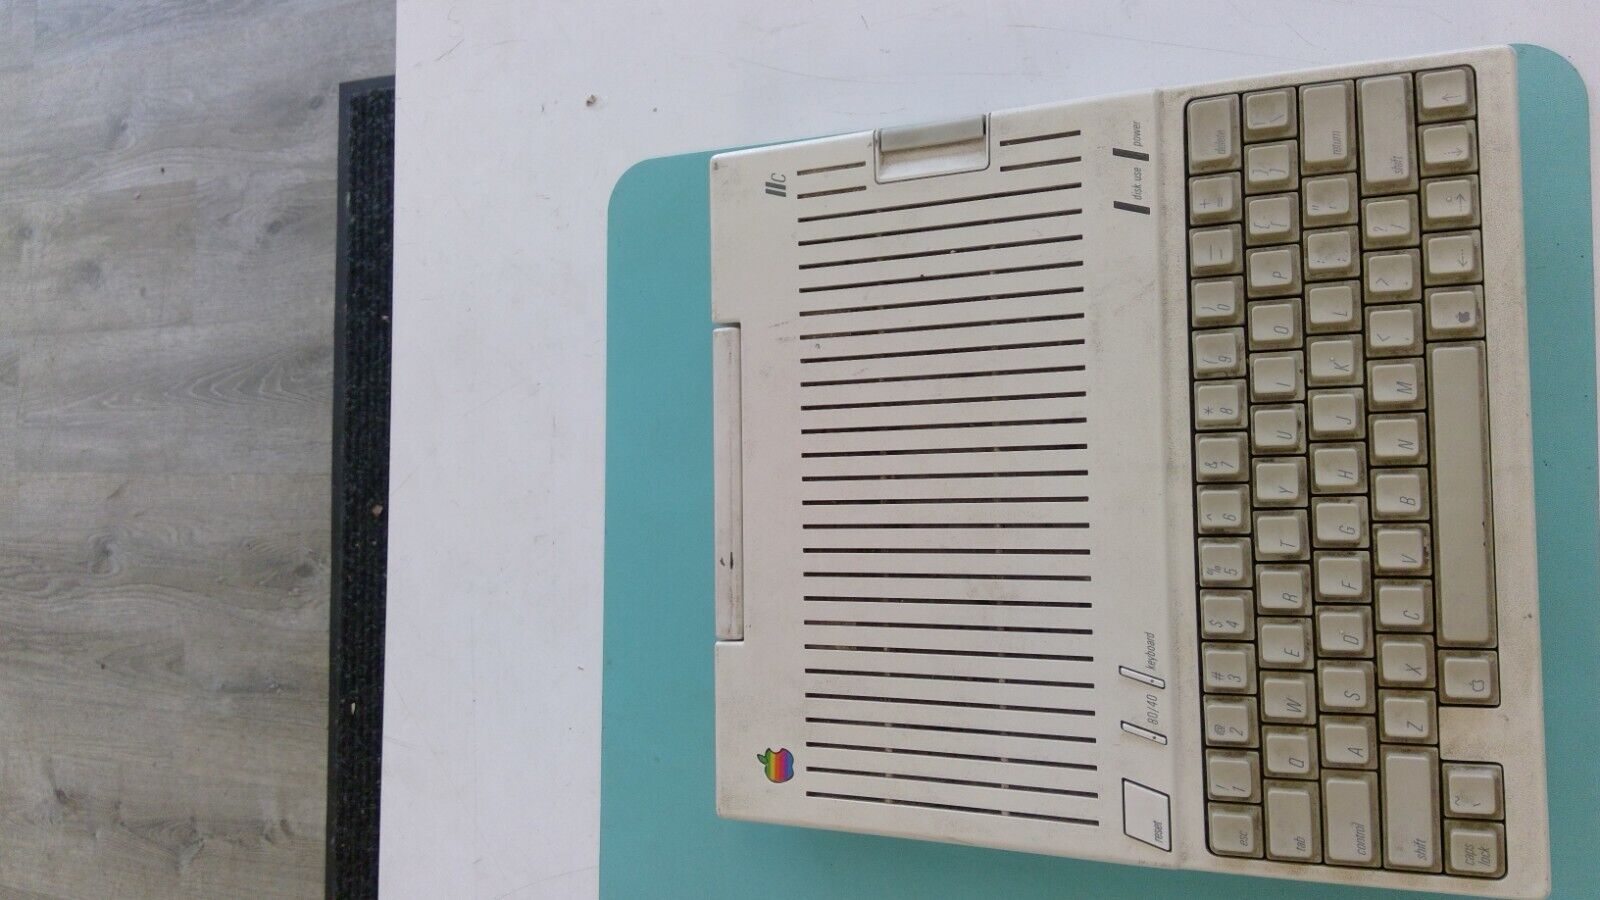 The Apple IIC Model No: A2S4000